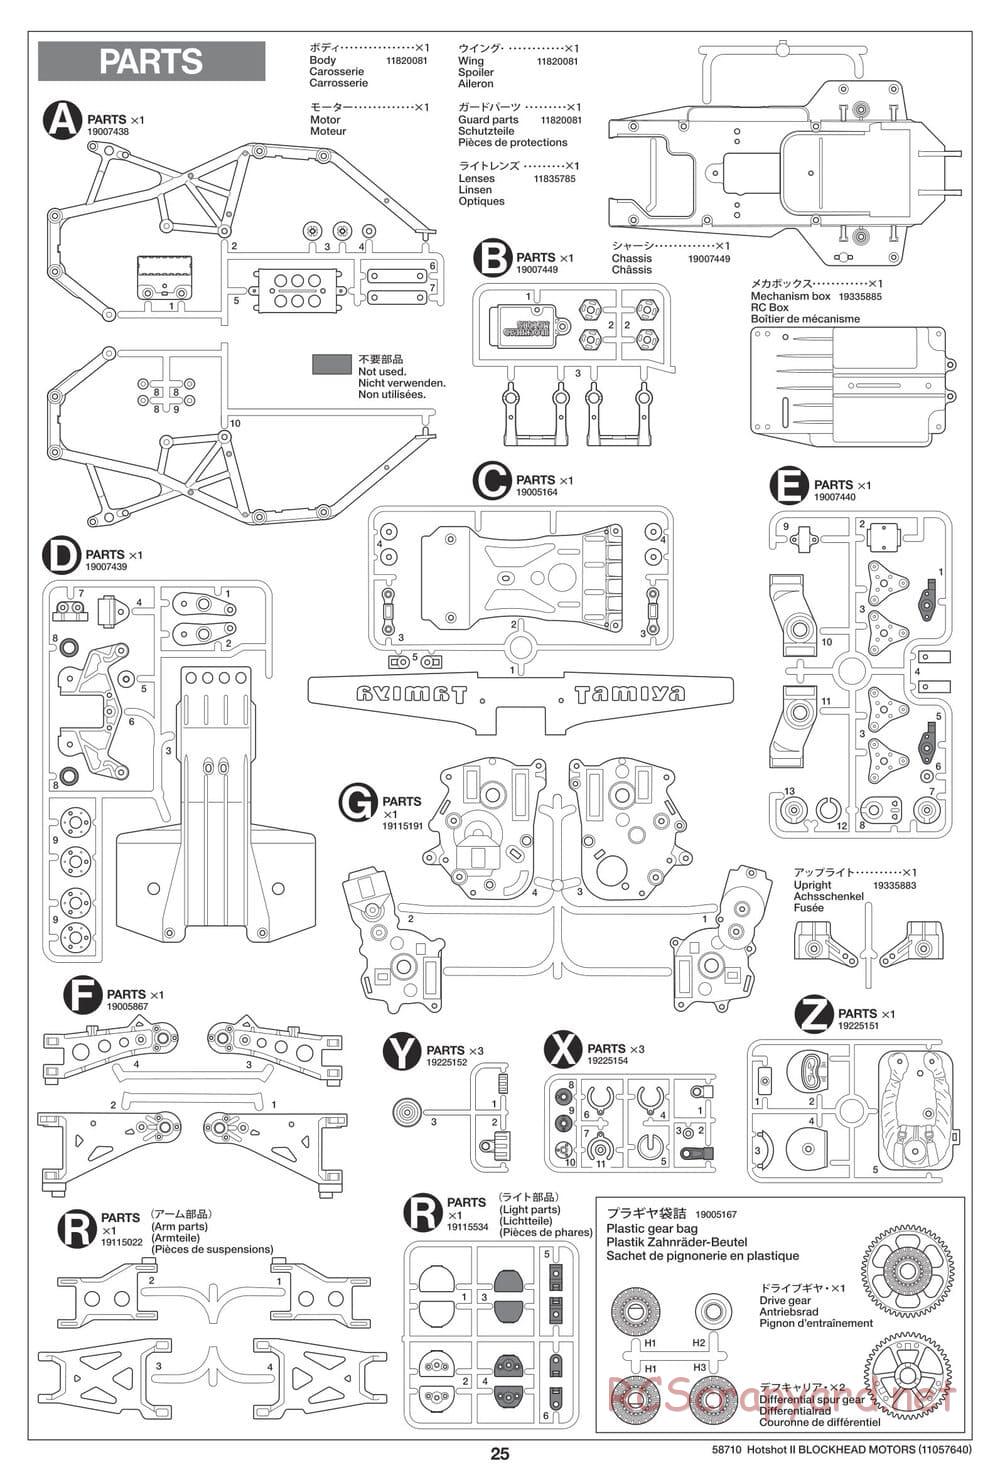 Tamiya - Hotshot II Blockhead Motors - HS Chassis - Manual - Page 25